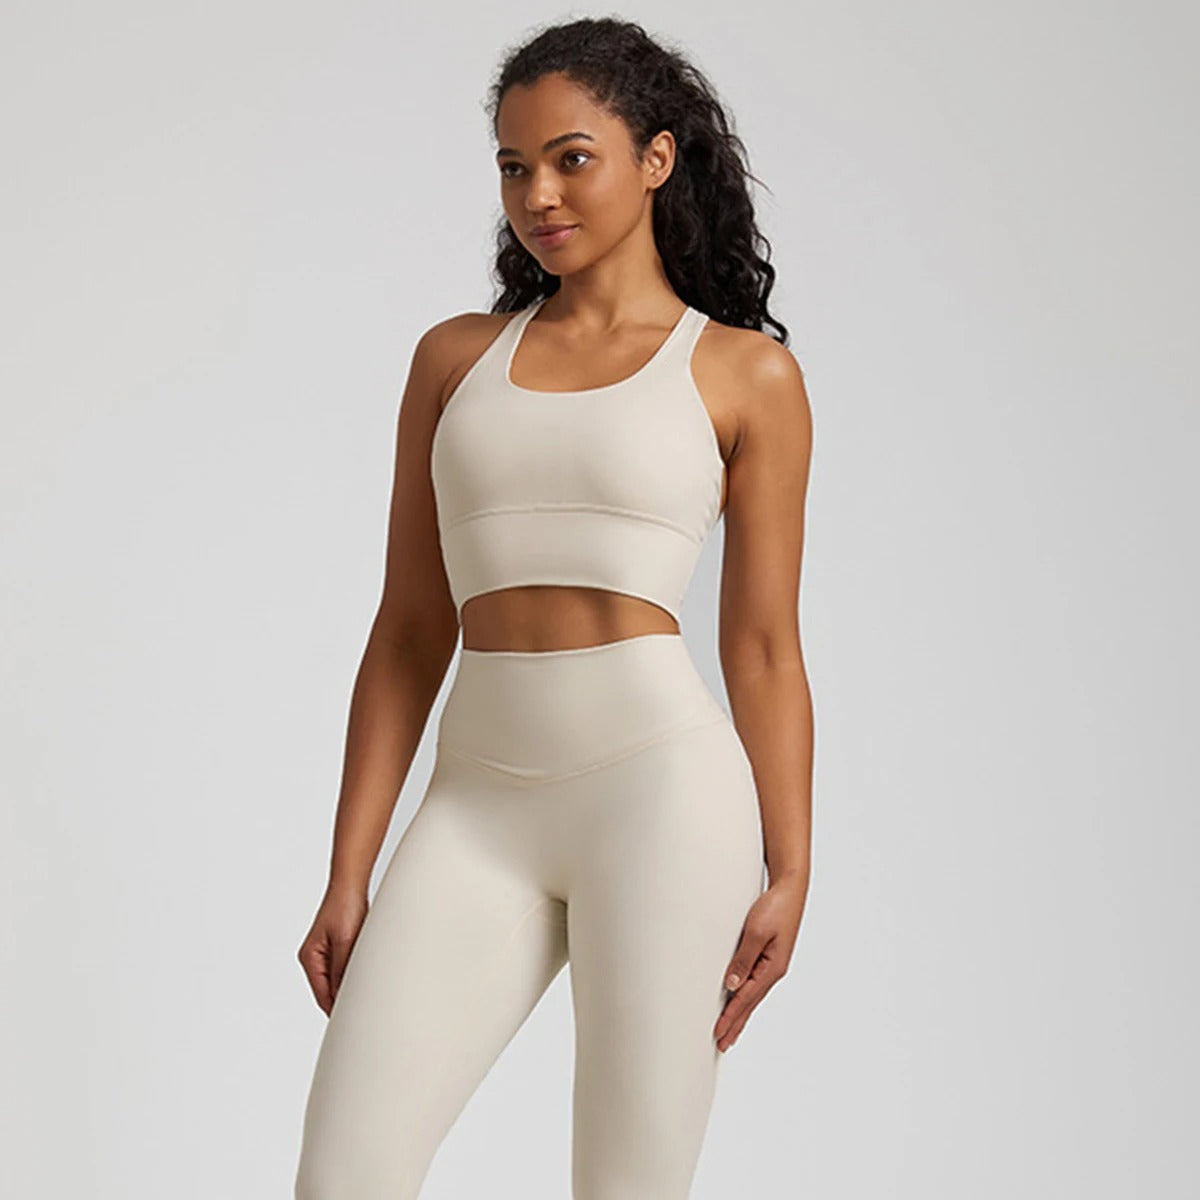 white sports bra and leggings set